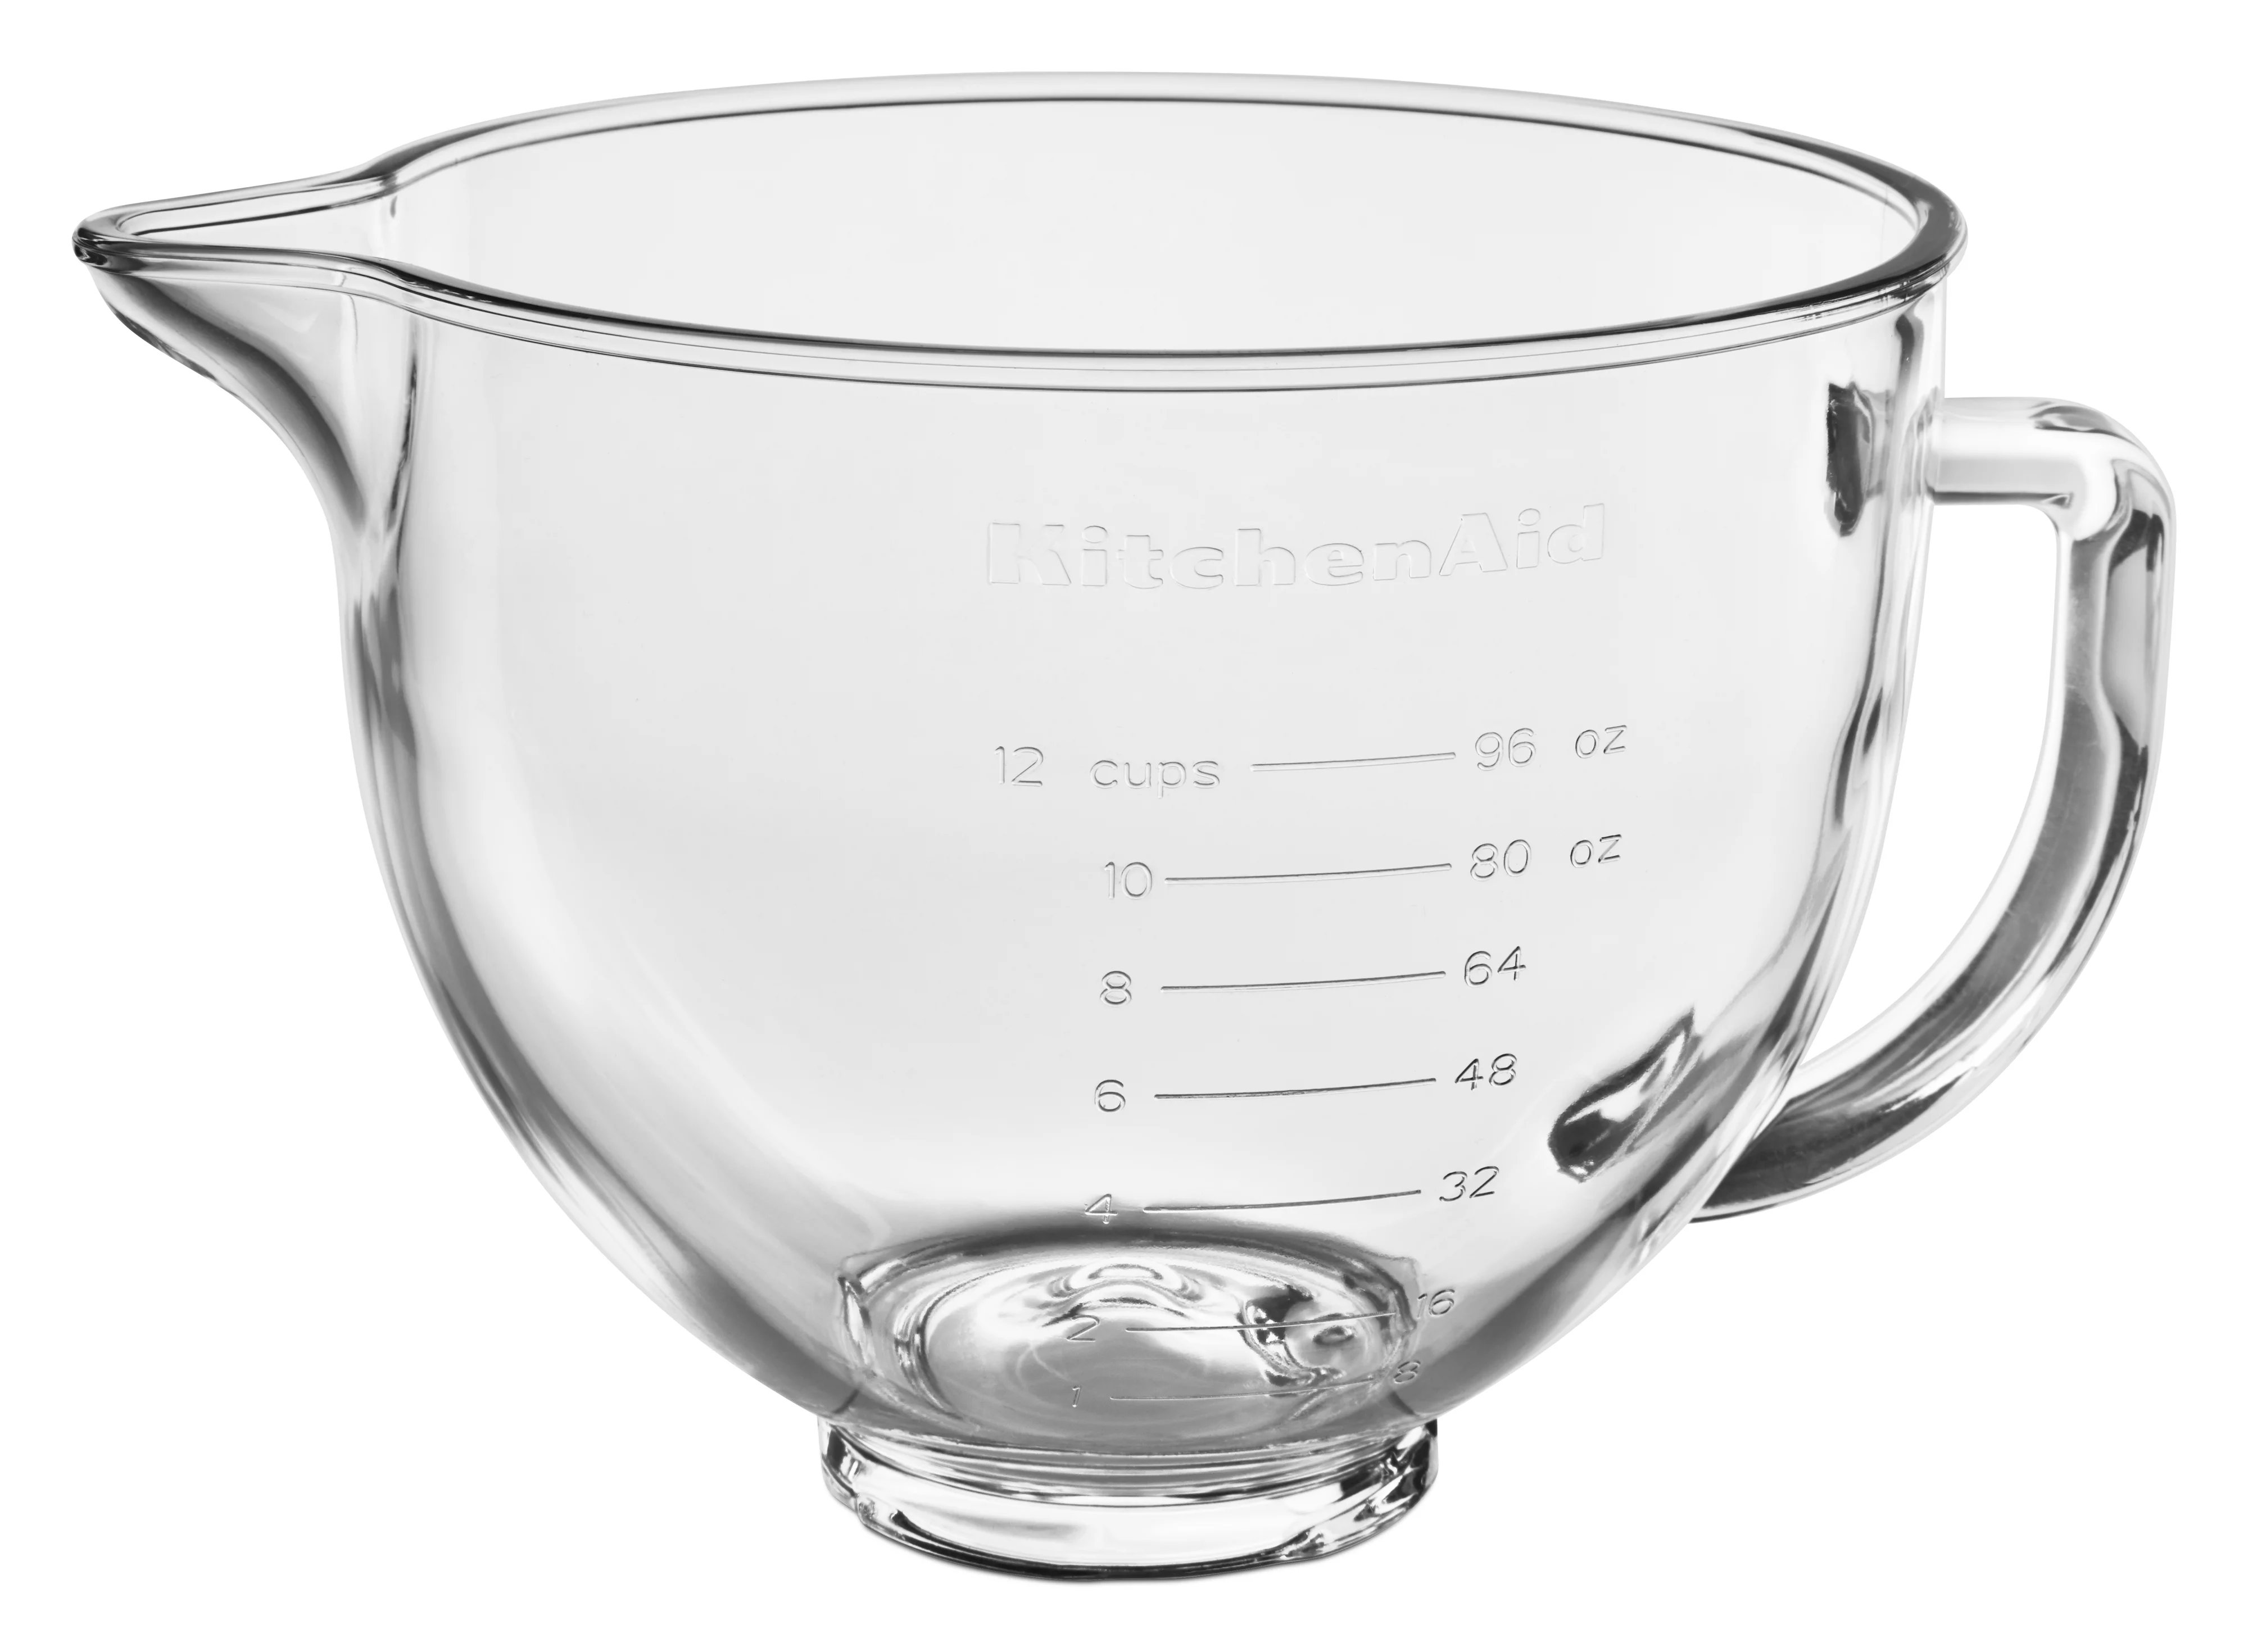 KitchenAid 5 Quart Tilt-Head Glass Bowl with Measurement Markings, Clear, KSM5NLGB